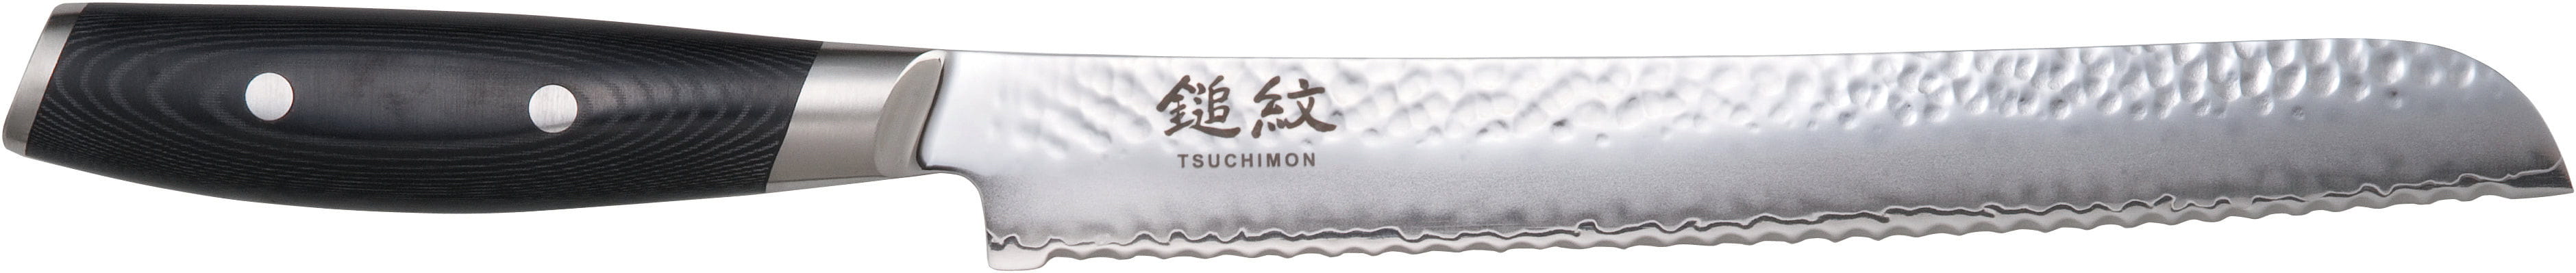 Yaxell Tsuuchimon Bread Knife, 23 cm